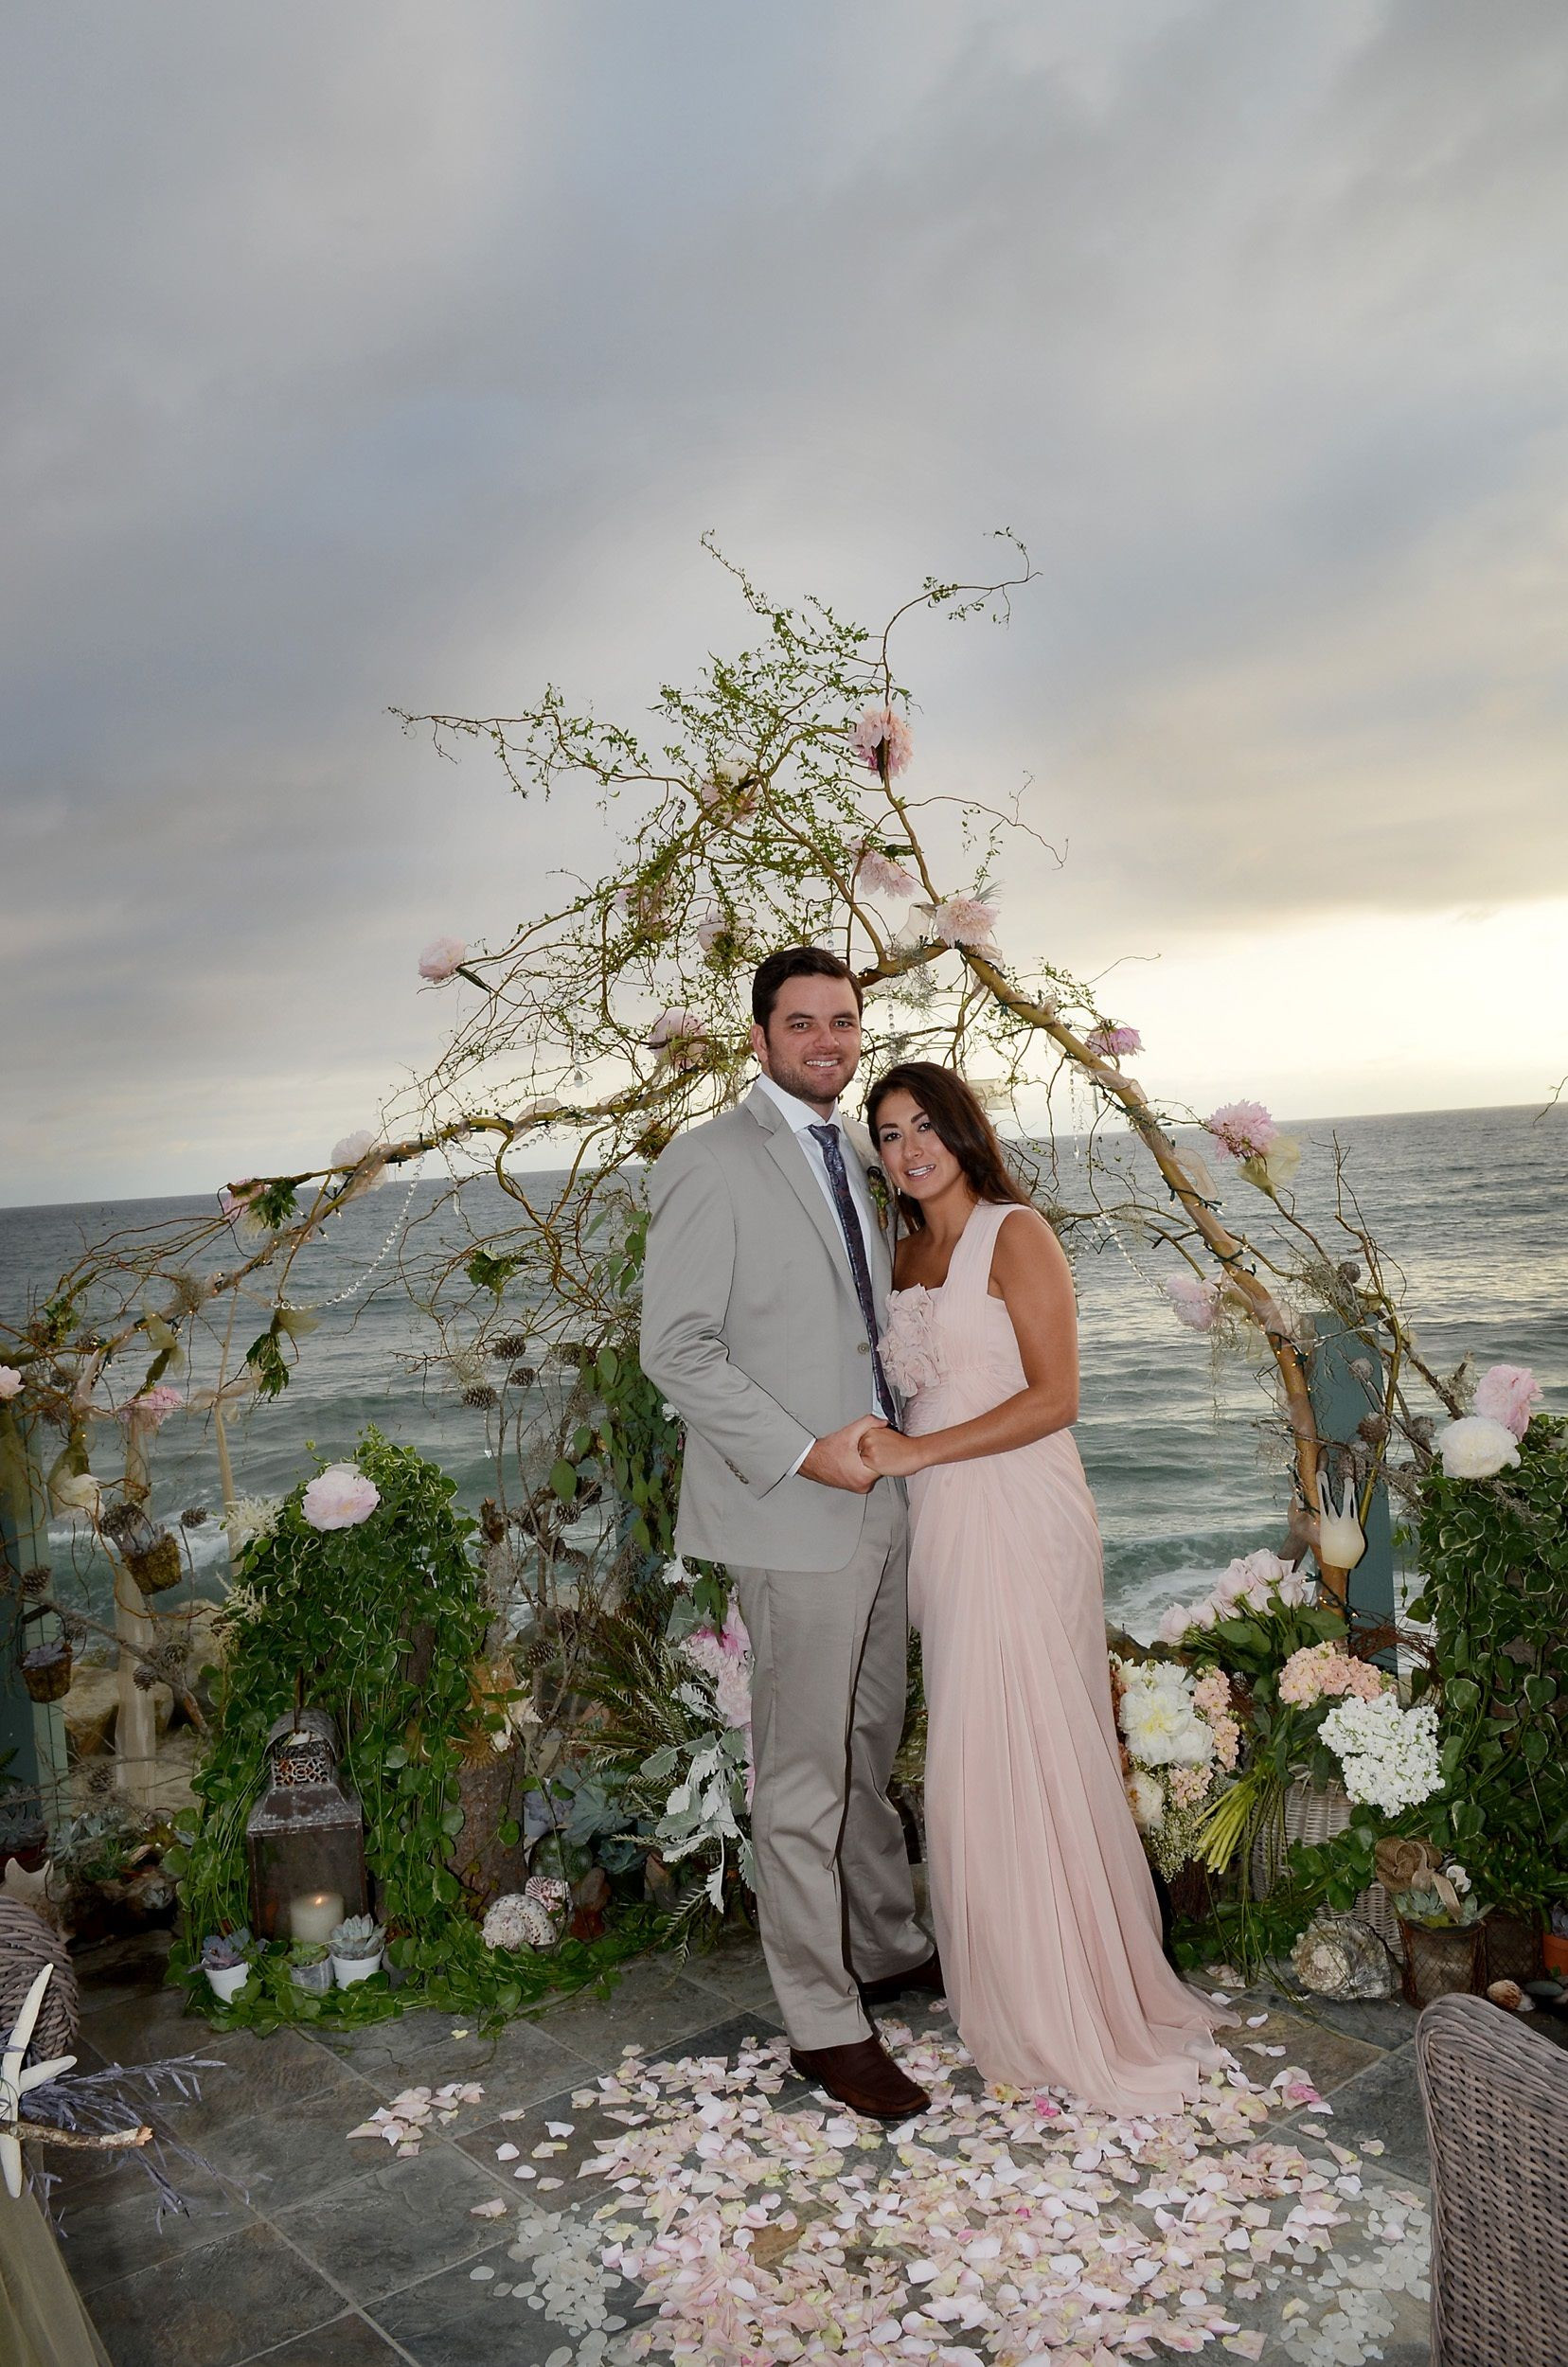 California Beach Wedding Venues
 Beach Wedding Venue in Oceanside Ca 760 722 1866